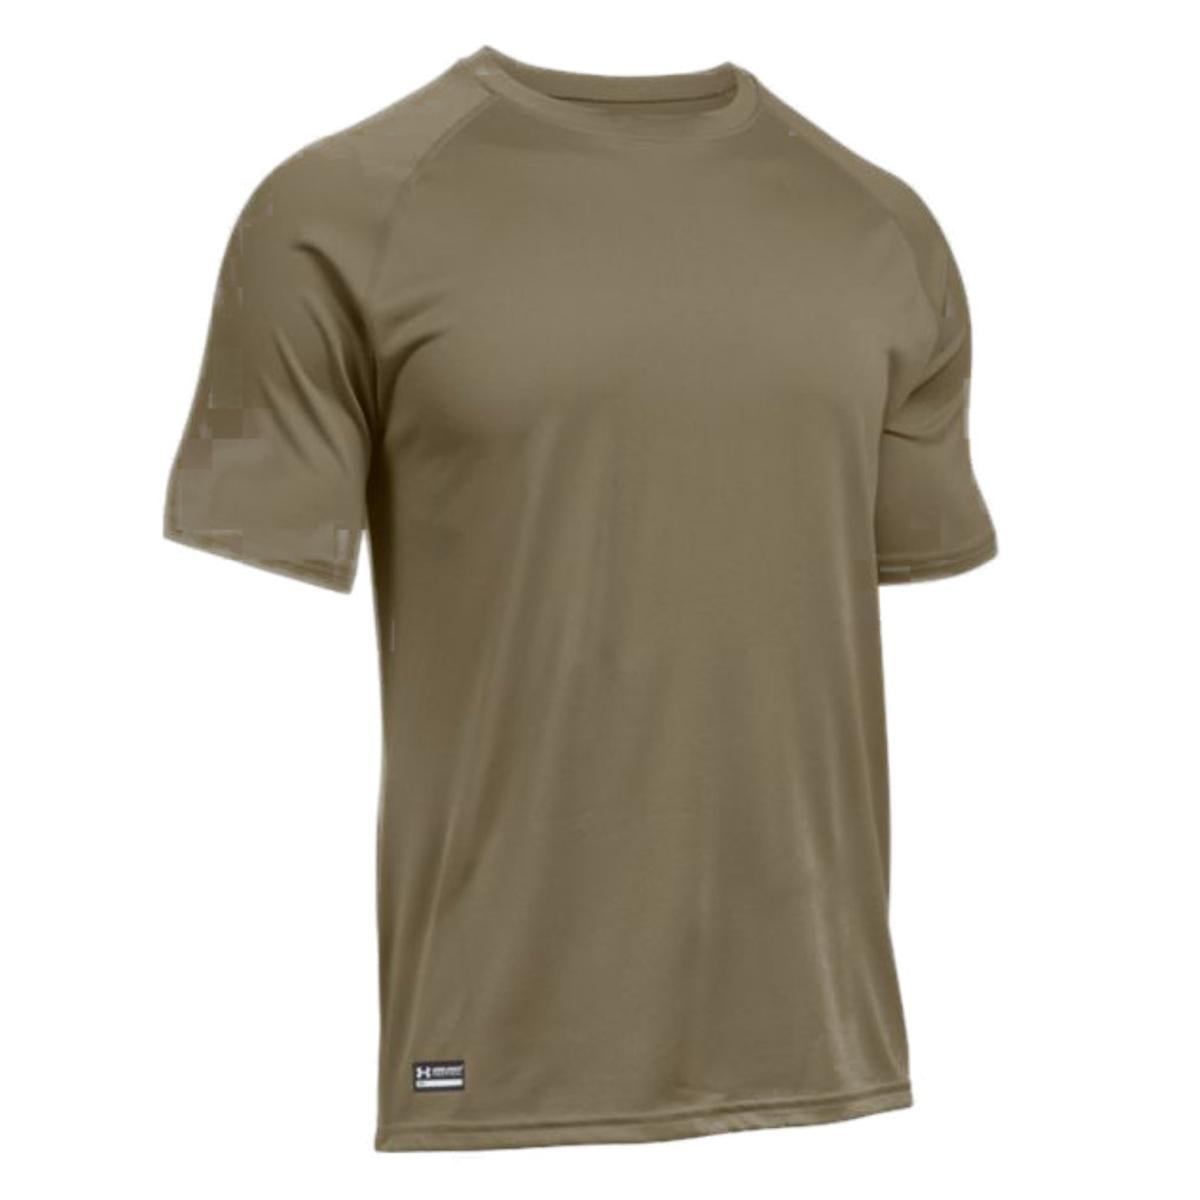 under armour 1005684 men's tan tactical tech short sleeve shirt - size  medium